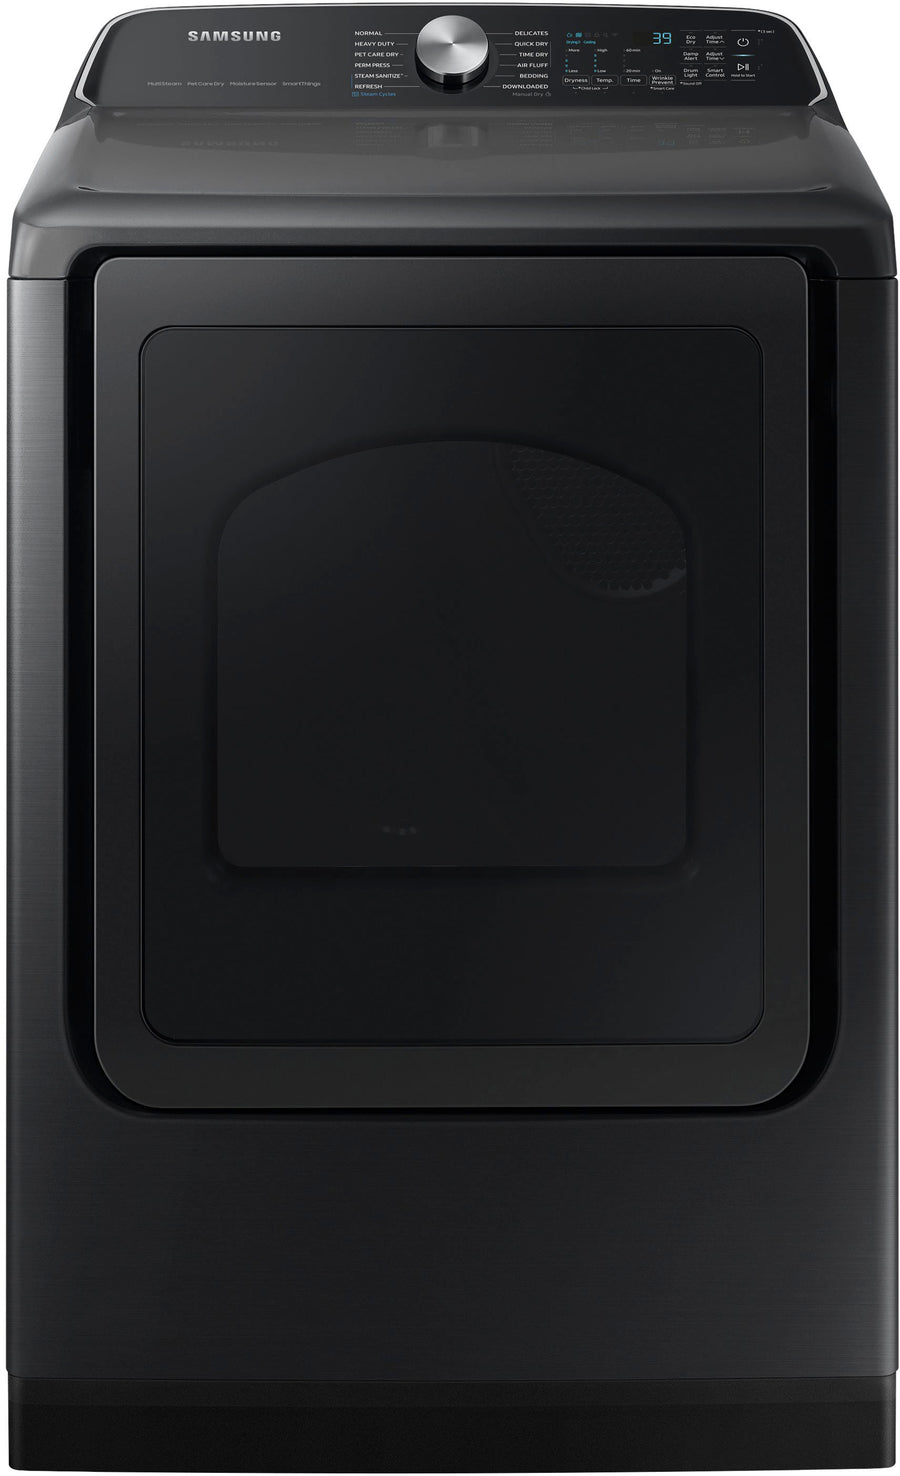 Samsung - 7.4 cu. ft. Smart Electric Dryer with Steam Sanitize+ - Black_0